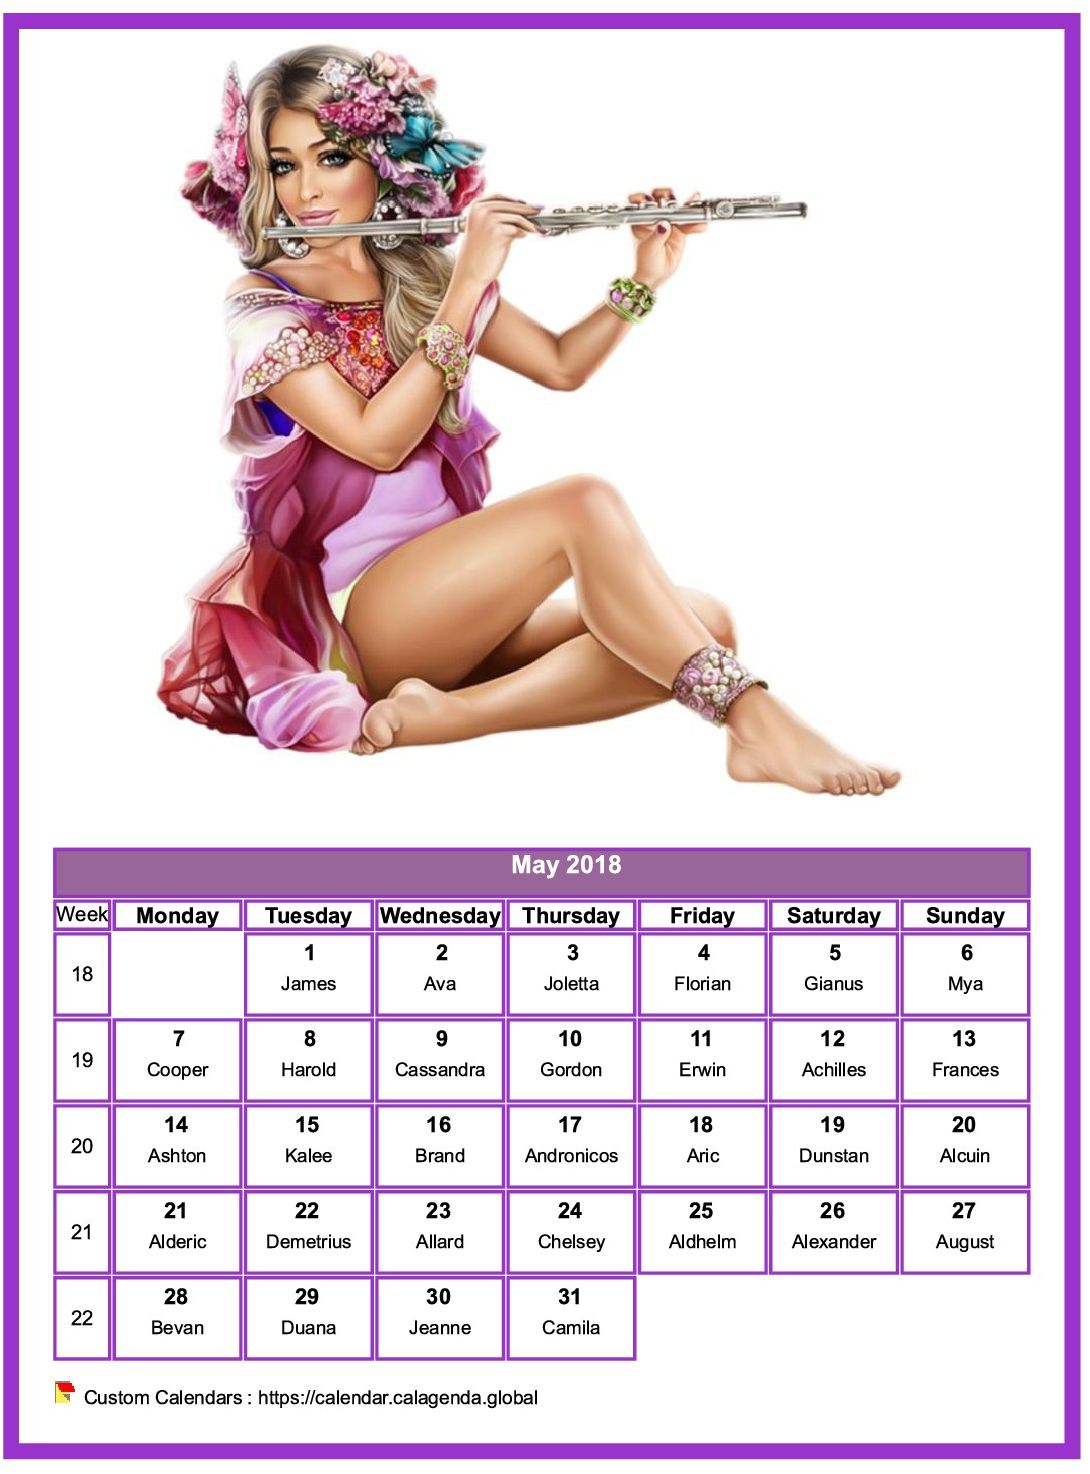 Calendar May 2018 women